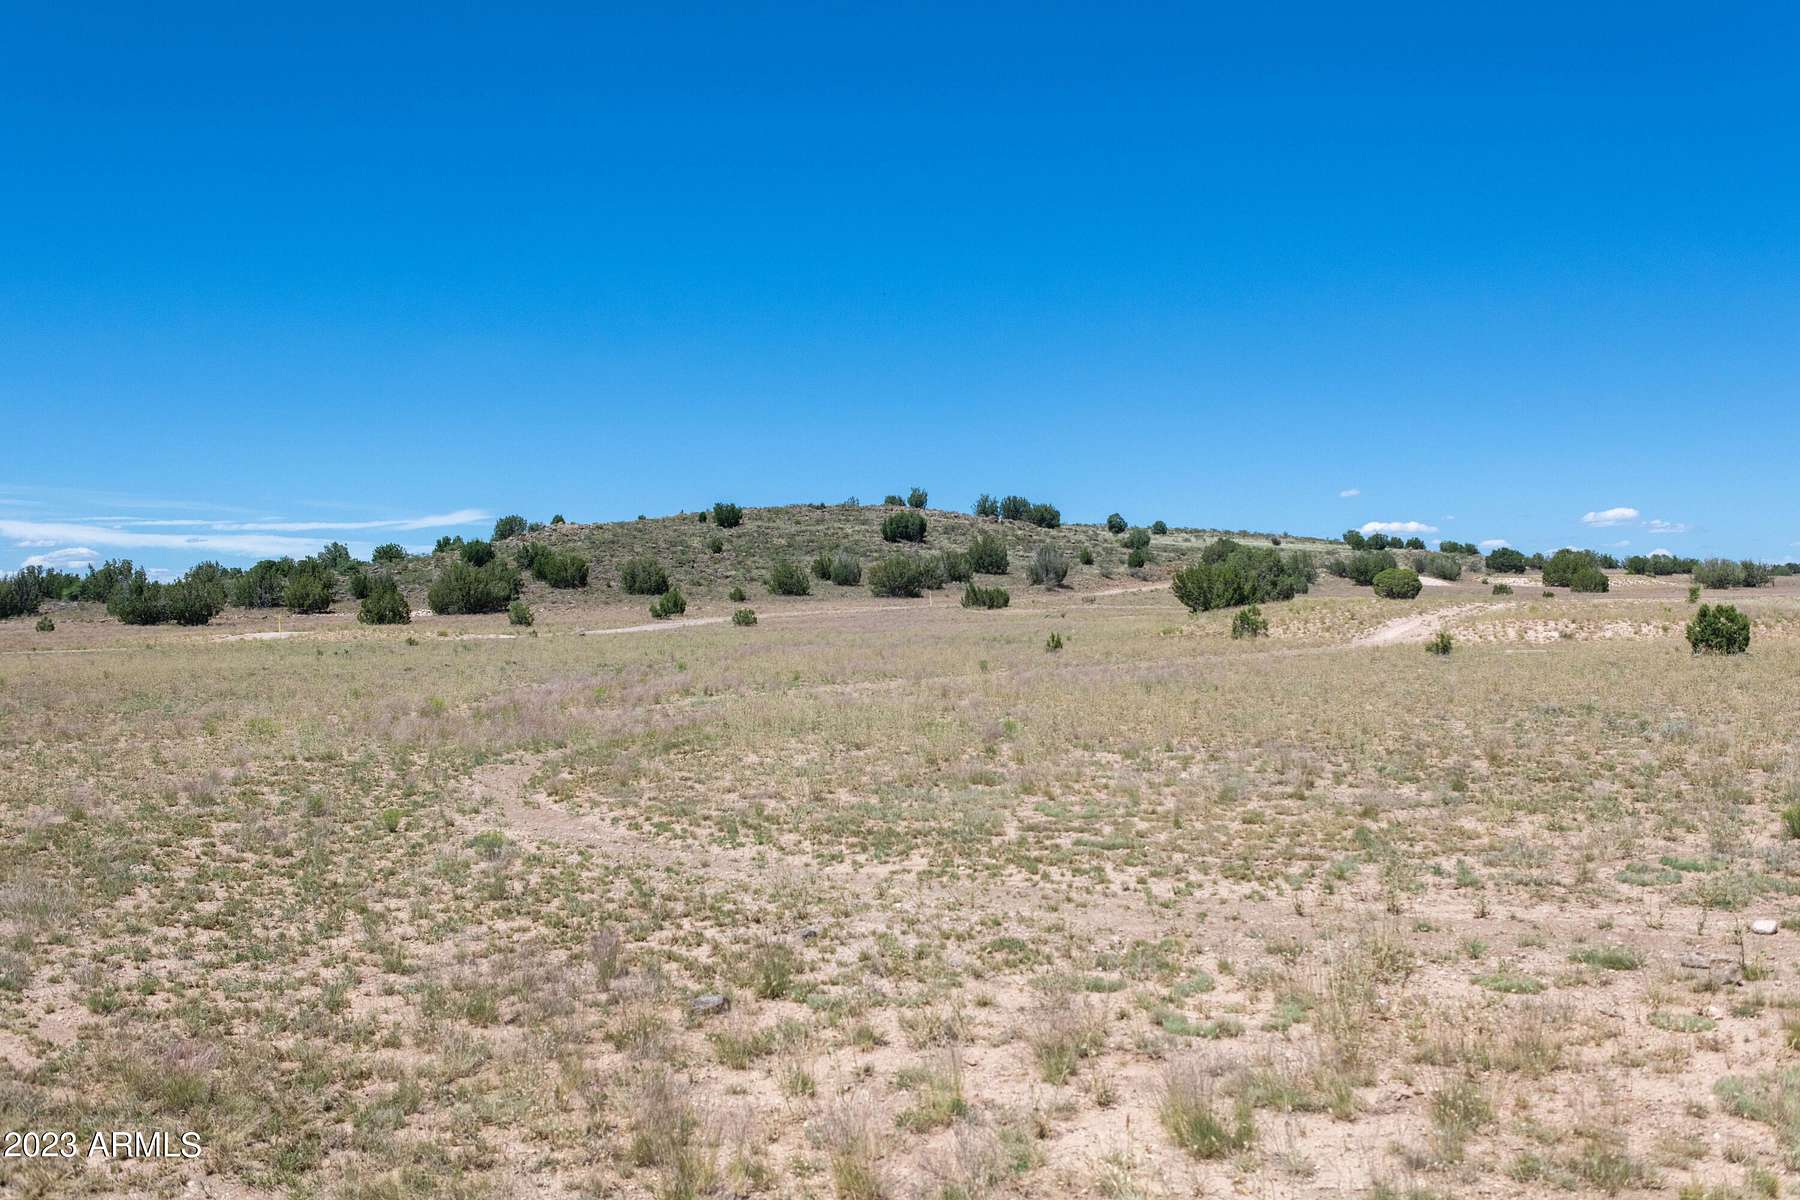 2 Acres of Land for Sale in Paulden, Arizona